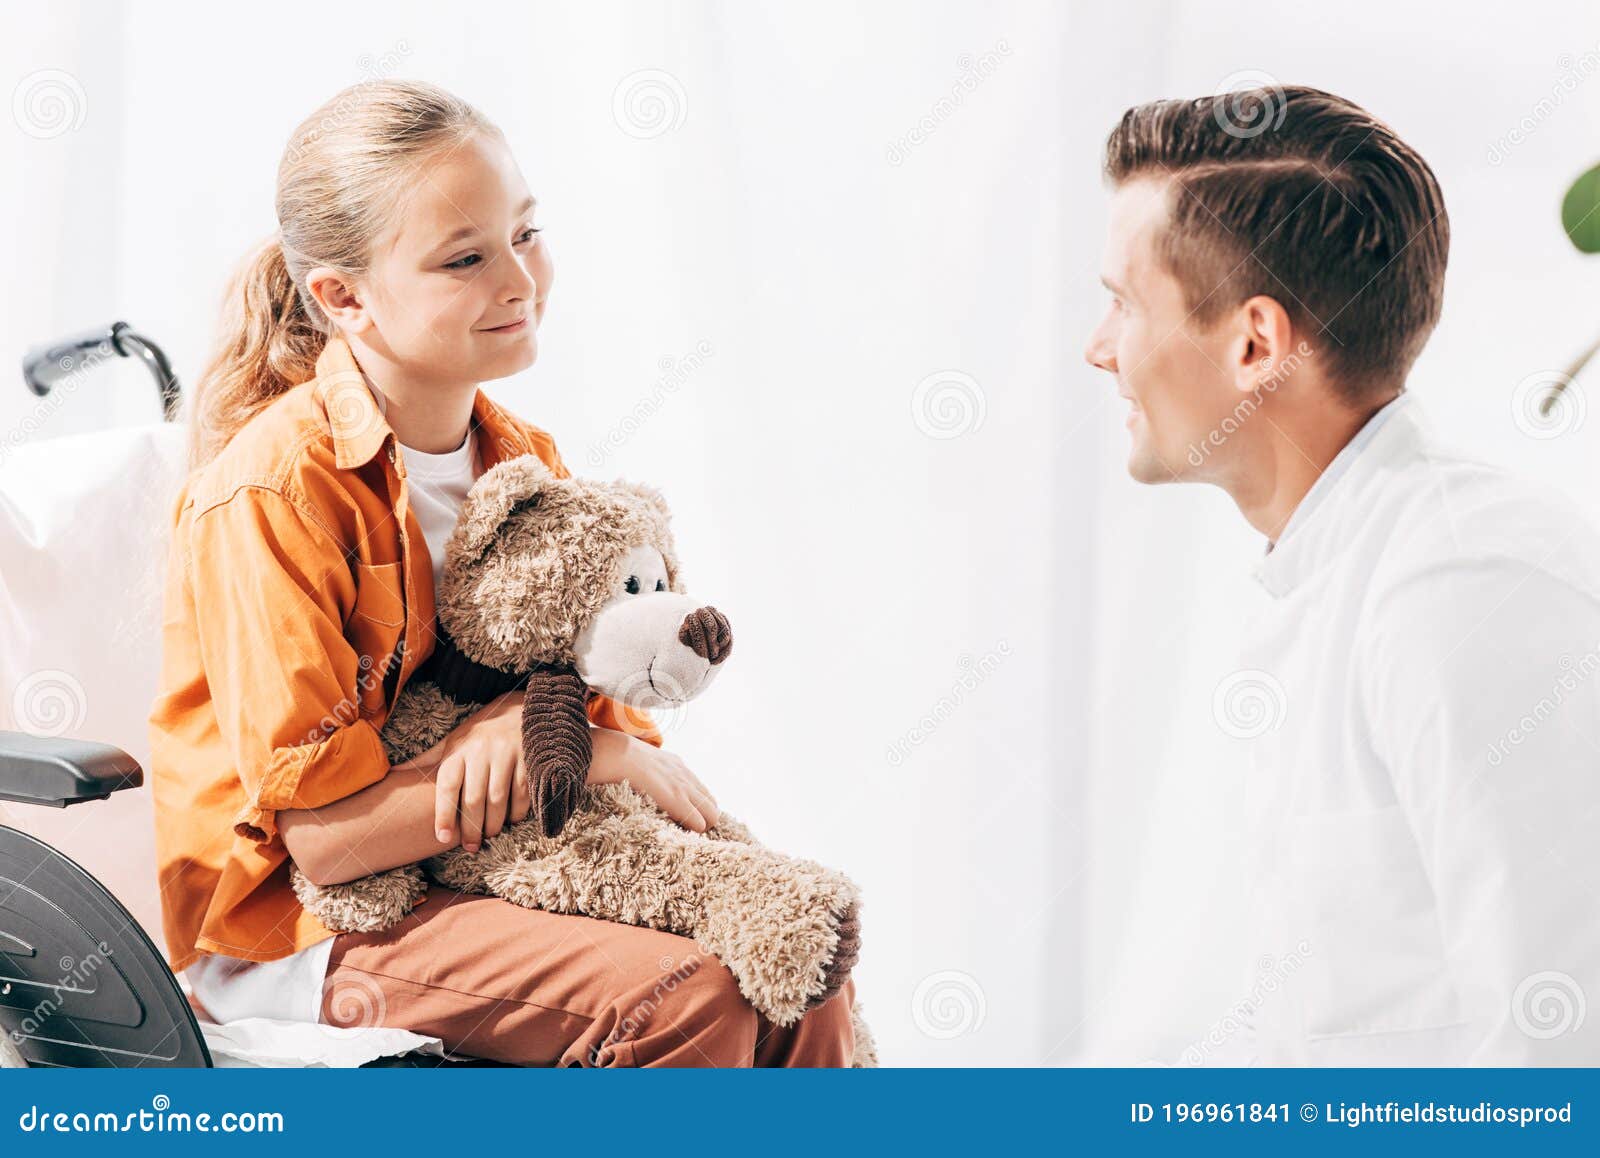 pediatrist and kid with teddy bear on wheelchair